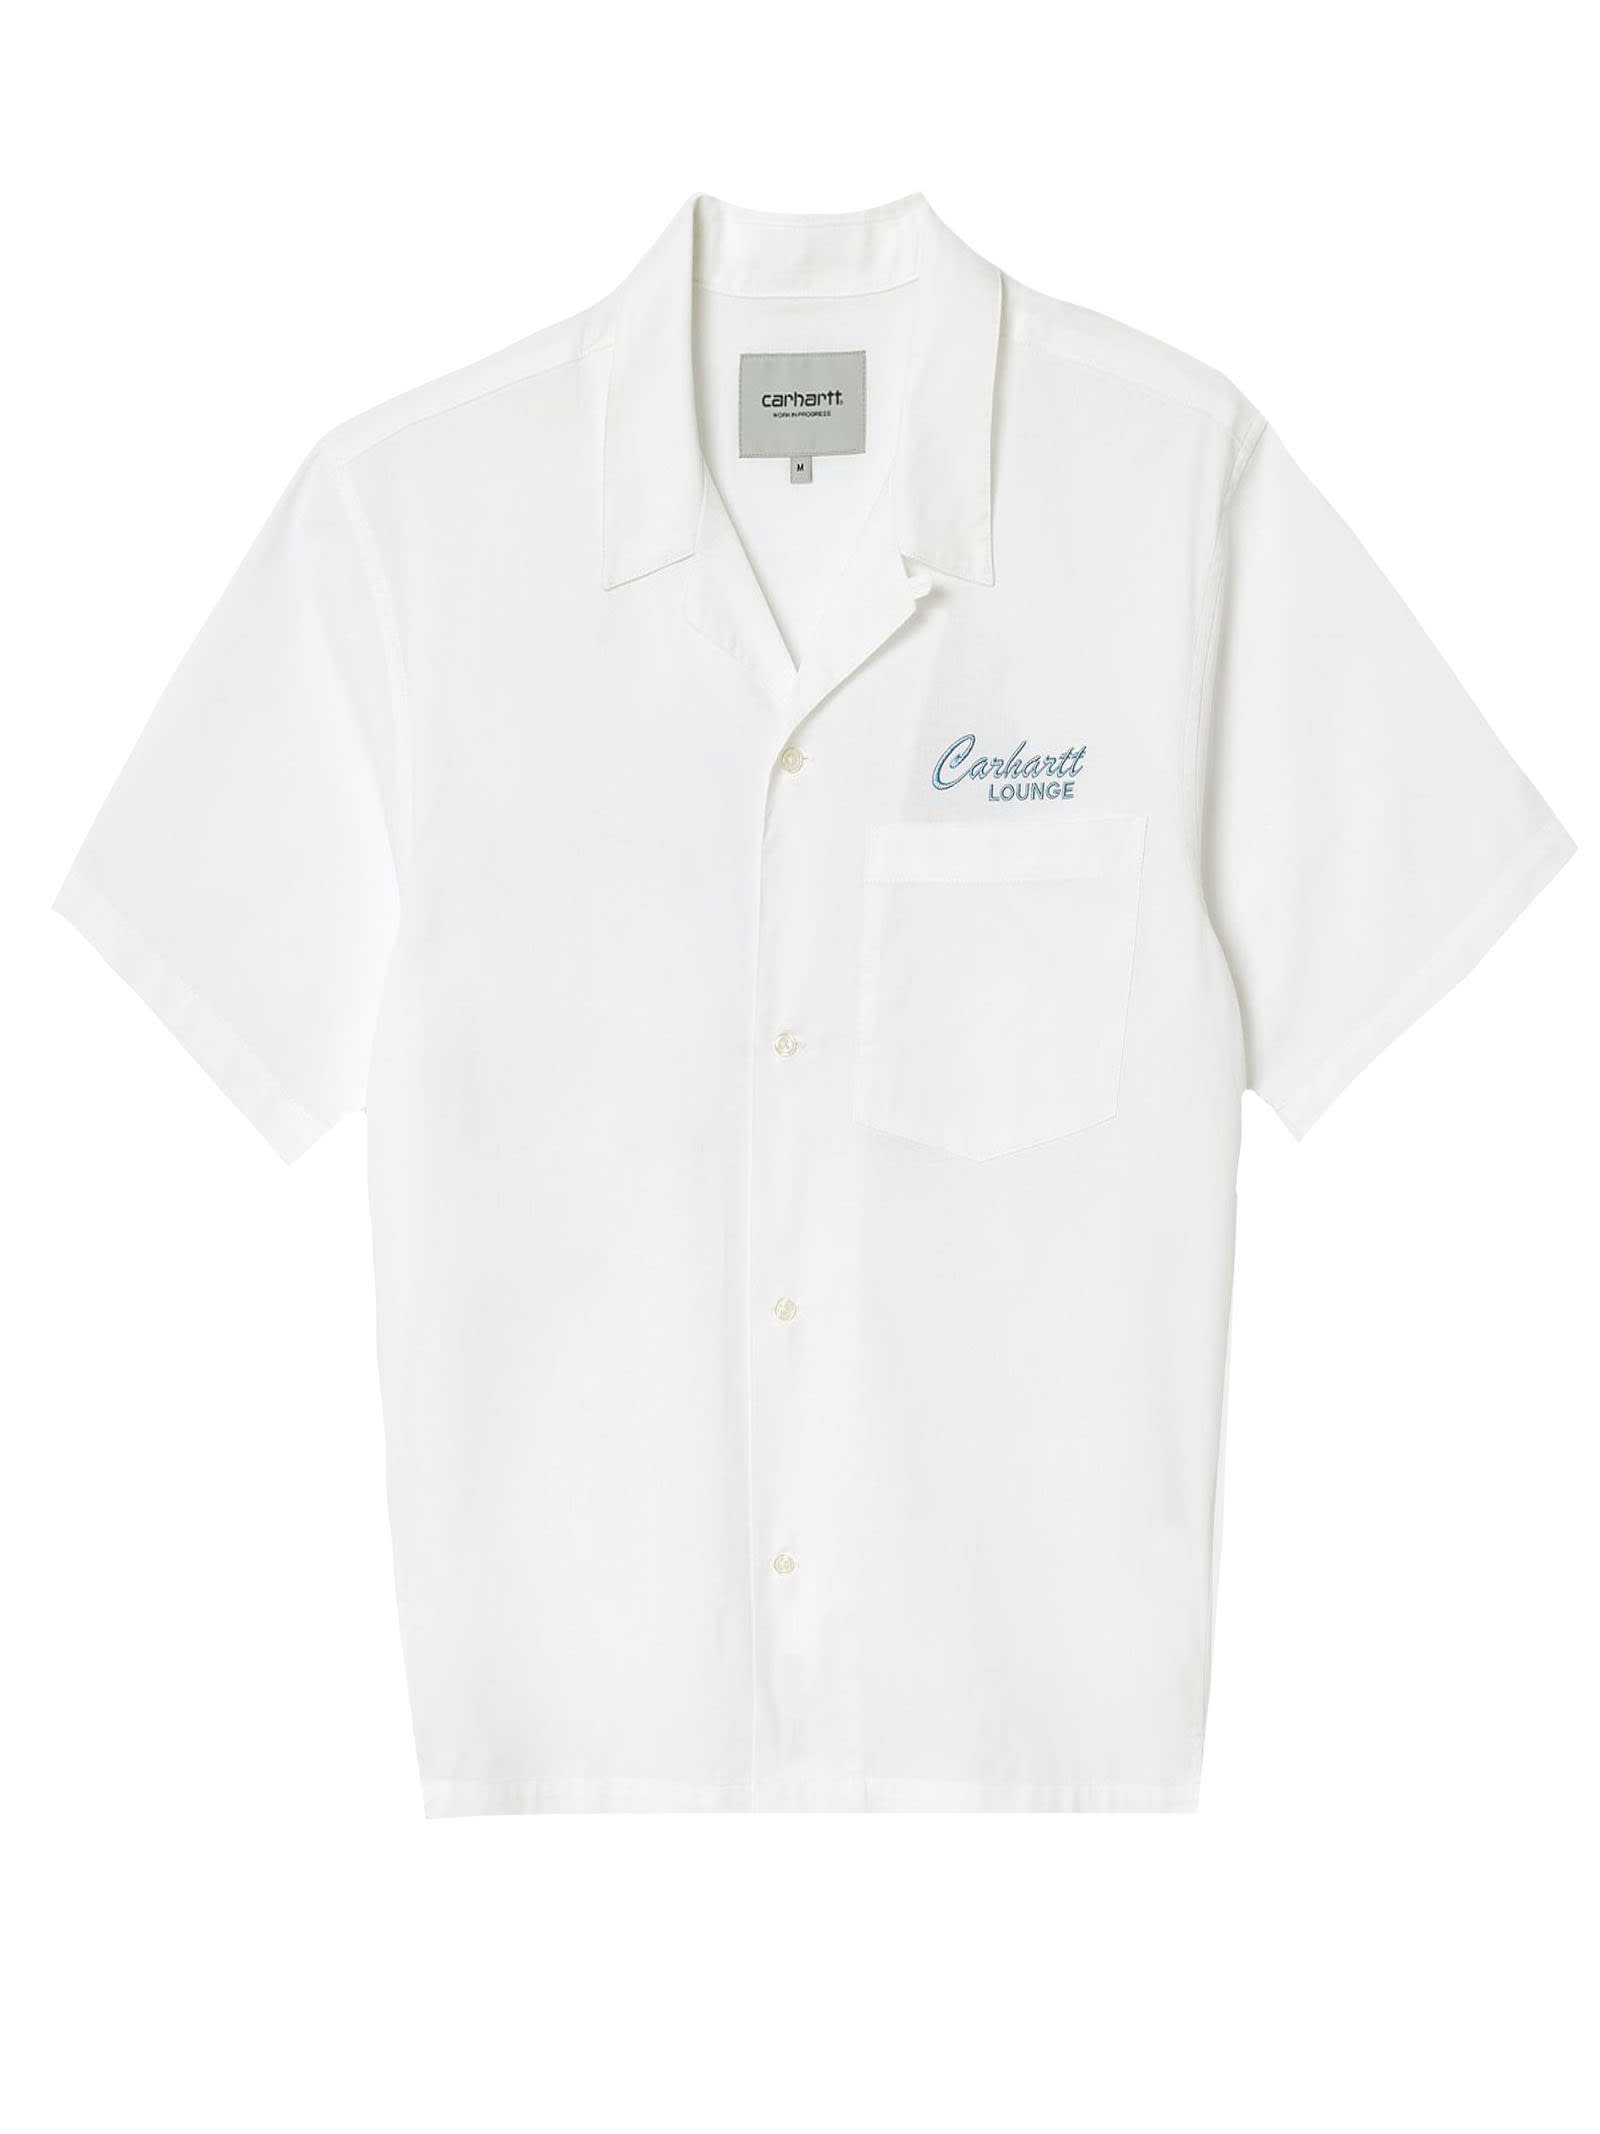 Carhartt White Cotton Shirt